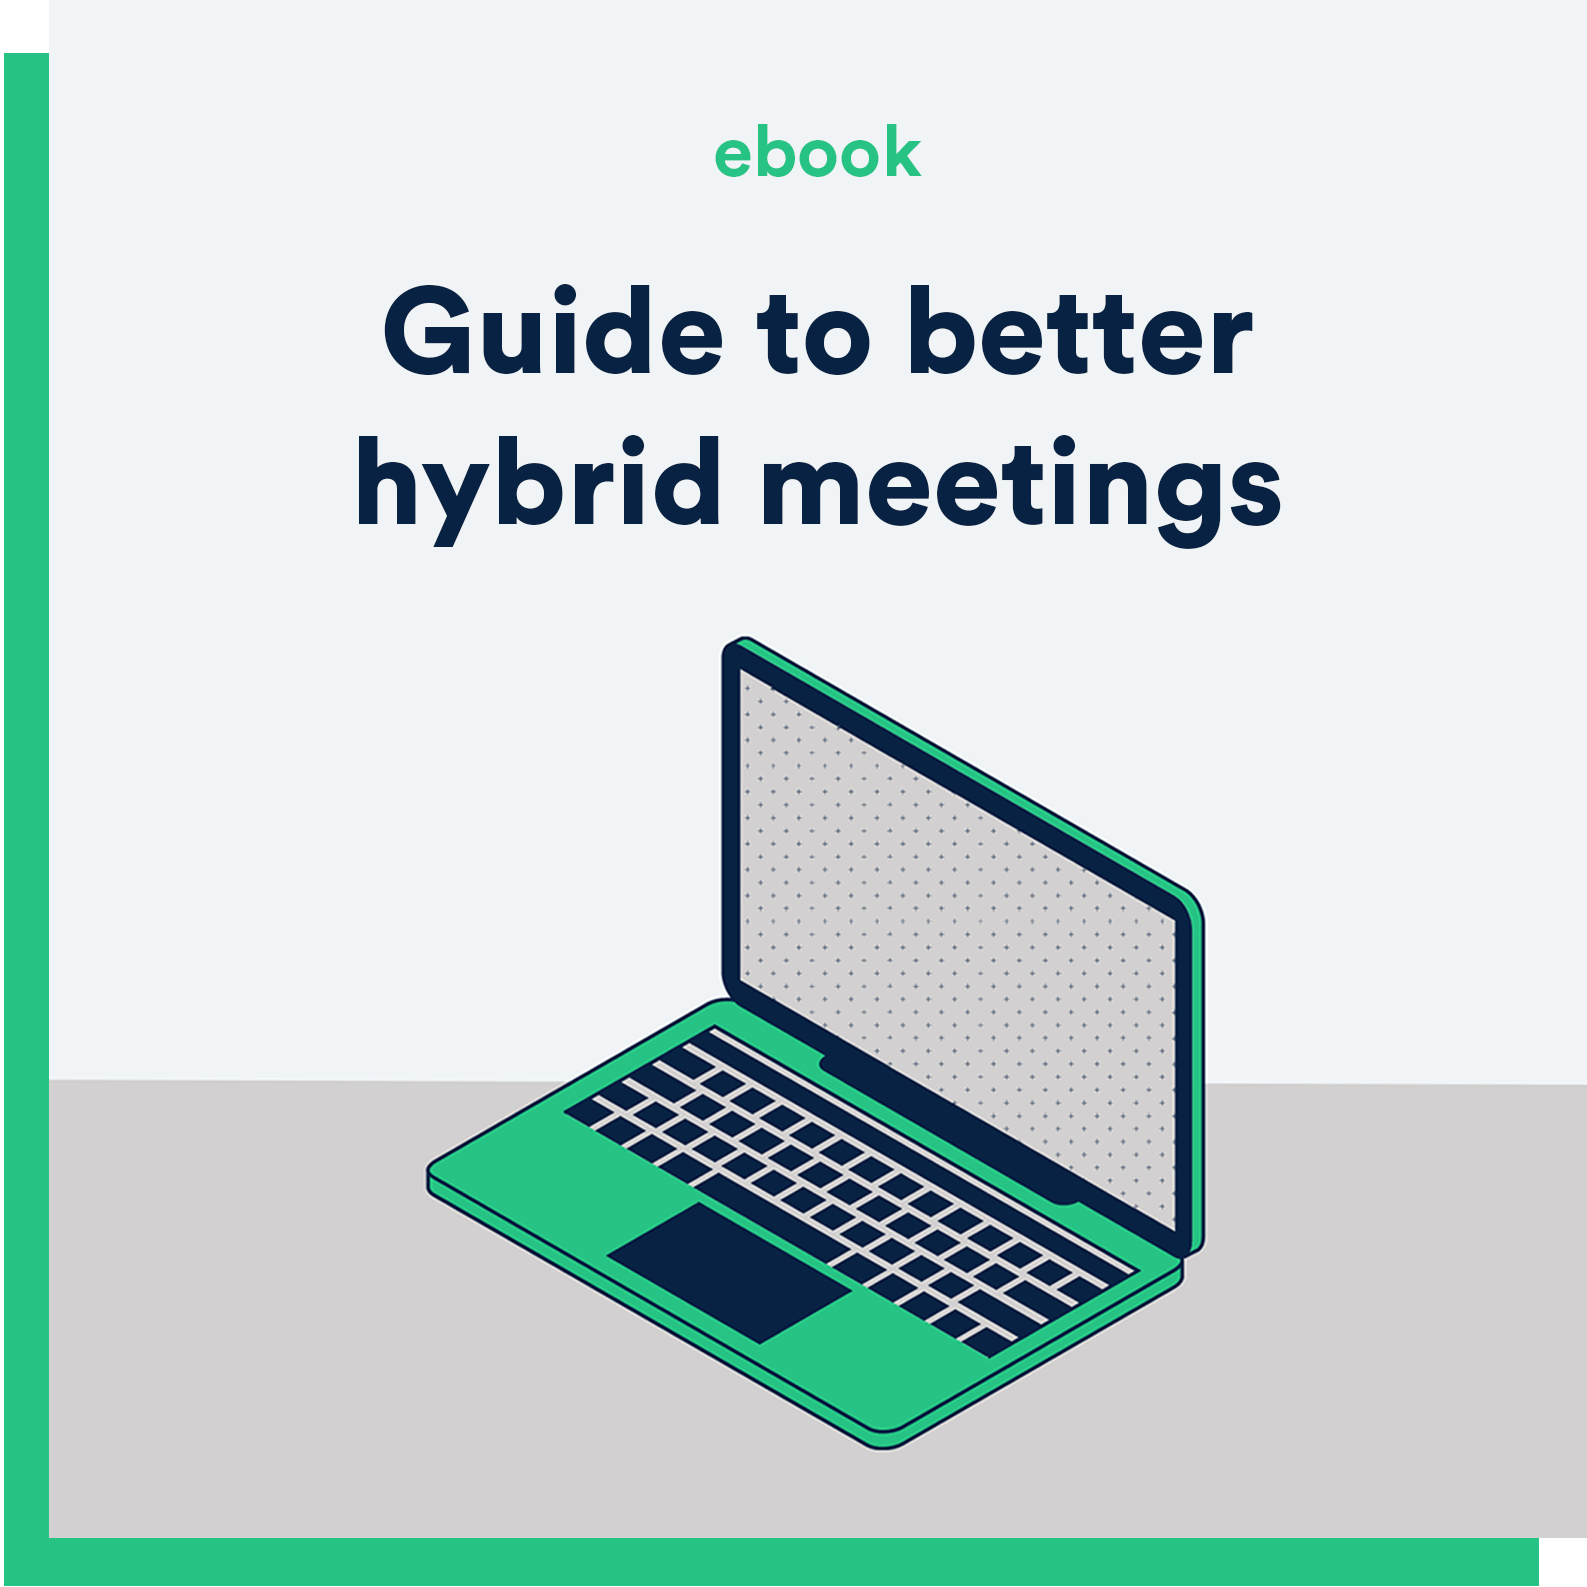 ebook-guide-to-better-hybrid-meetings